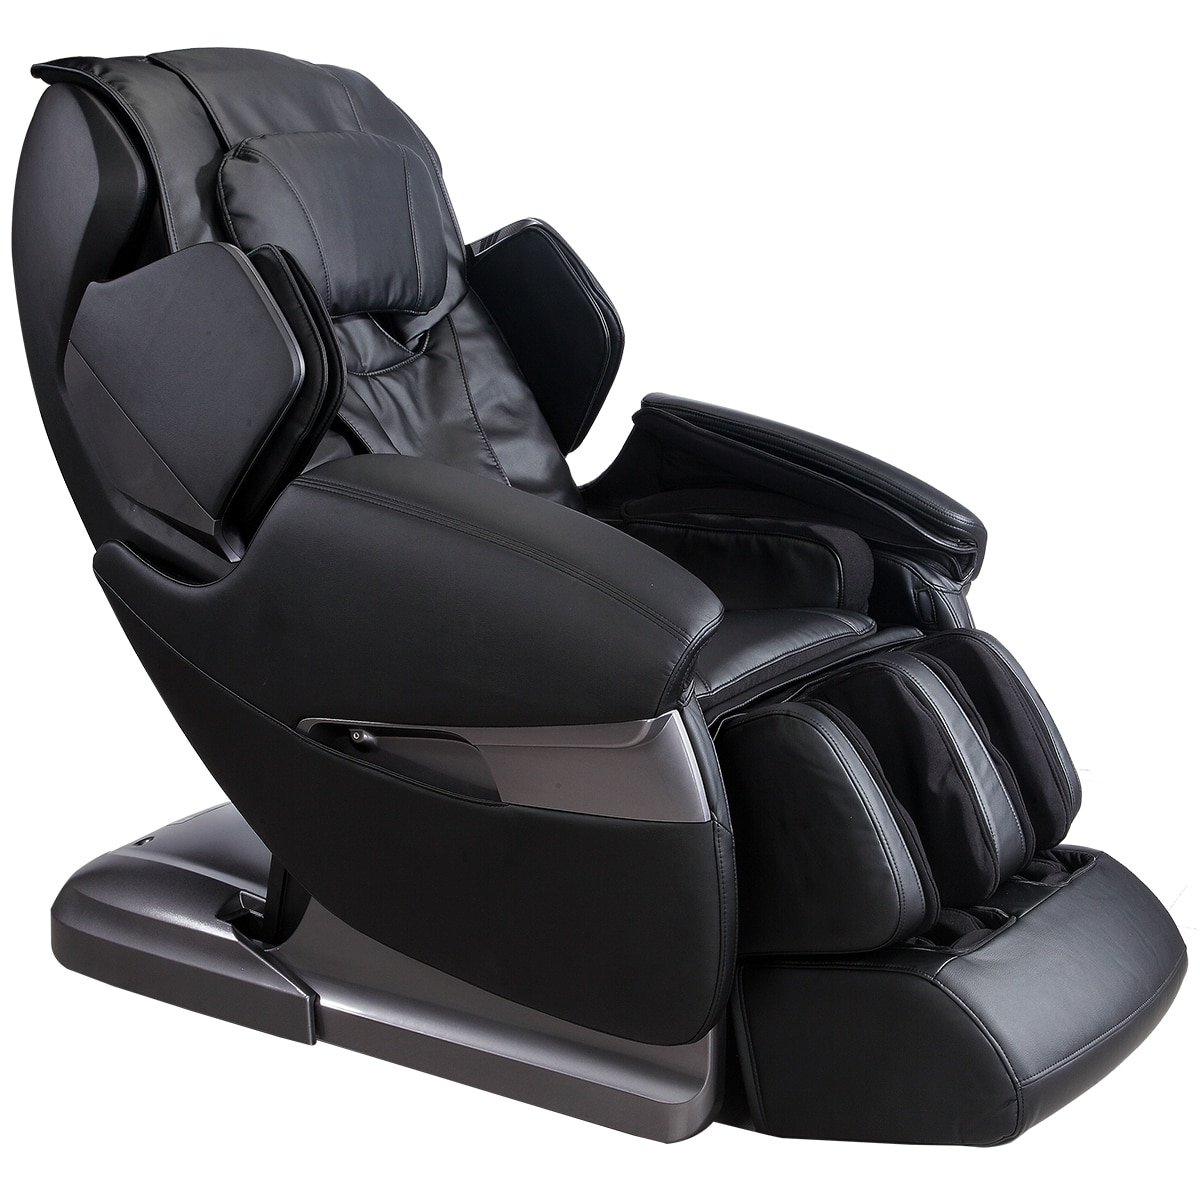 Masseuse Massage Chairs Platinum Health Massage Chair Black | Costco